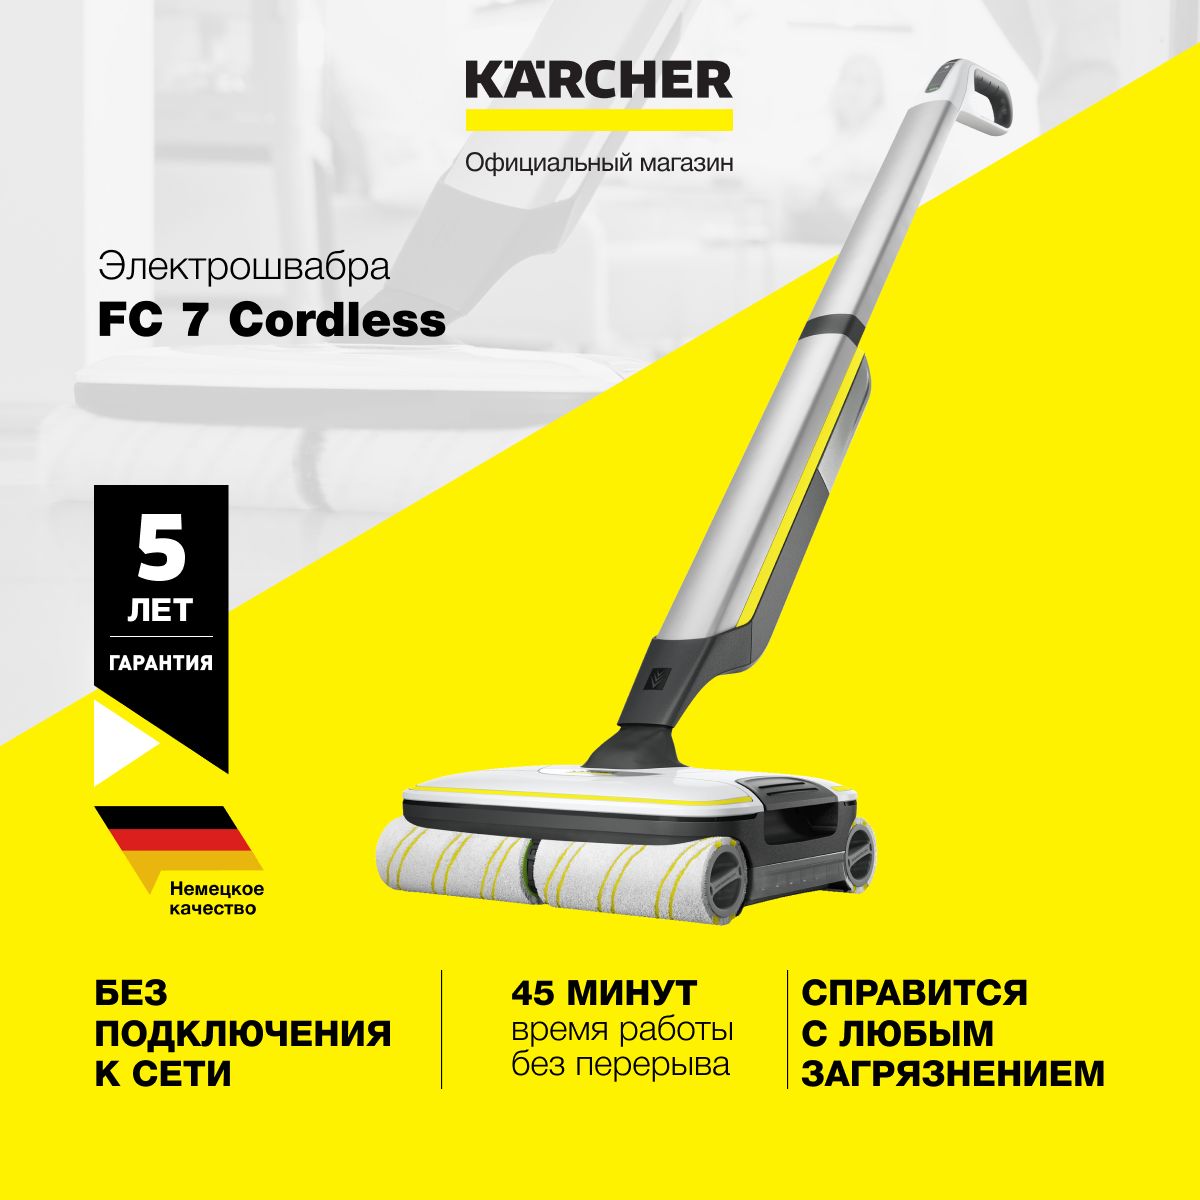 Karcher fc7 купить. Karcher FC 7 Cordless Premium. Беспроводная электрошвабра Karcher fc7 Cordless Premium. Электрошвабра Karcher FC 7 Cordless. Швабра Karcher fc7.